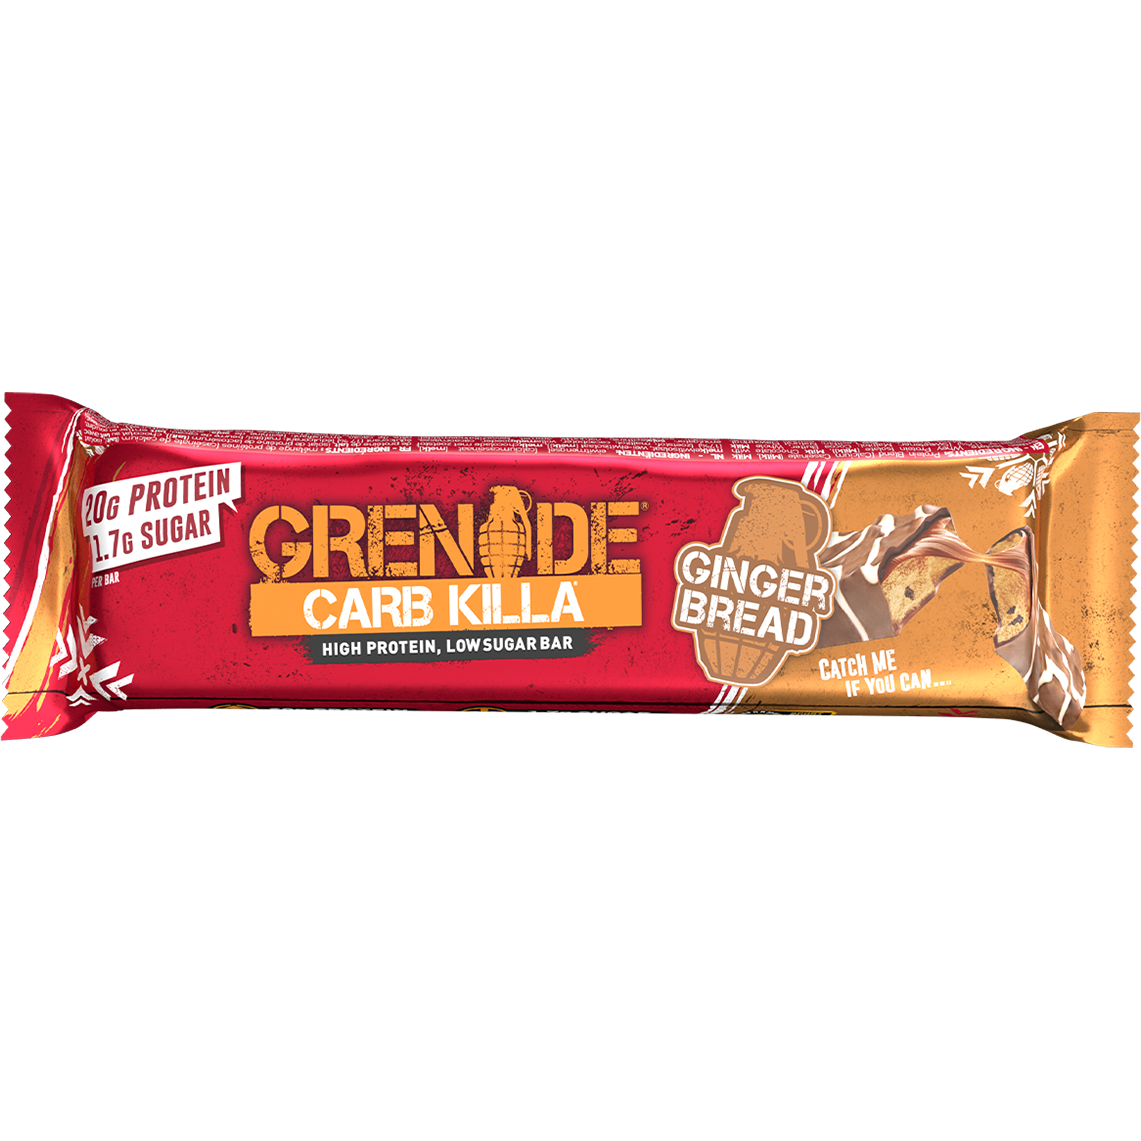 Grenade Carb Killa Keto Protein Bars (1 bar) Protein Snacks Gingerbread *LIMITED EDITION* Grenade